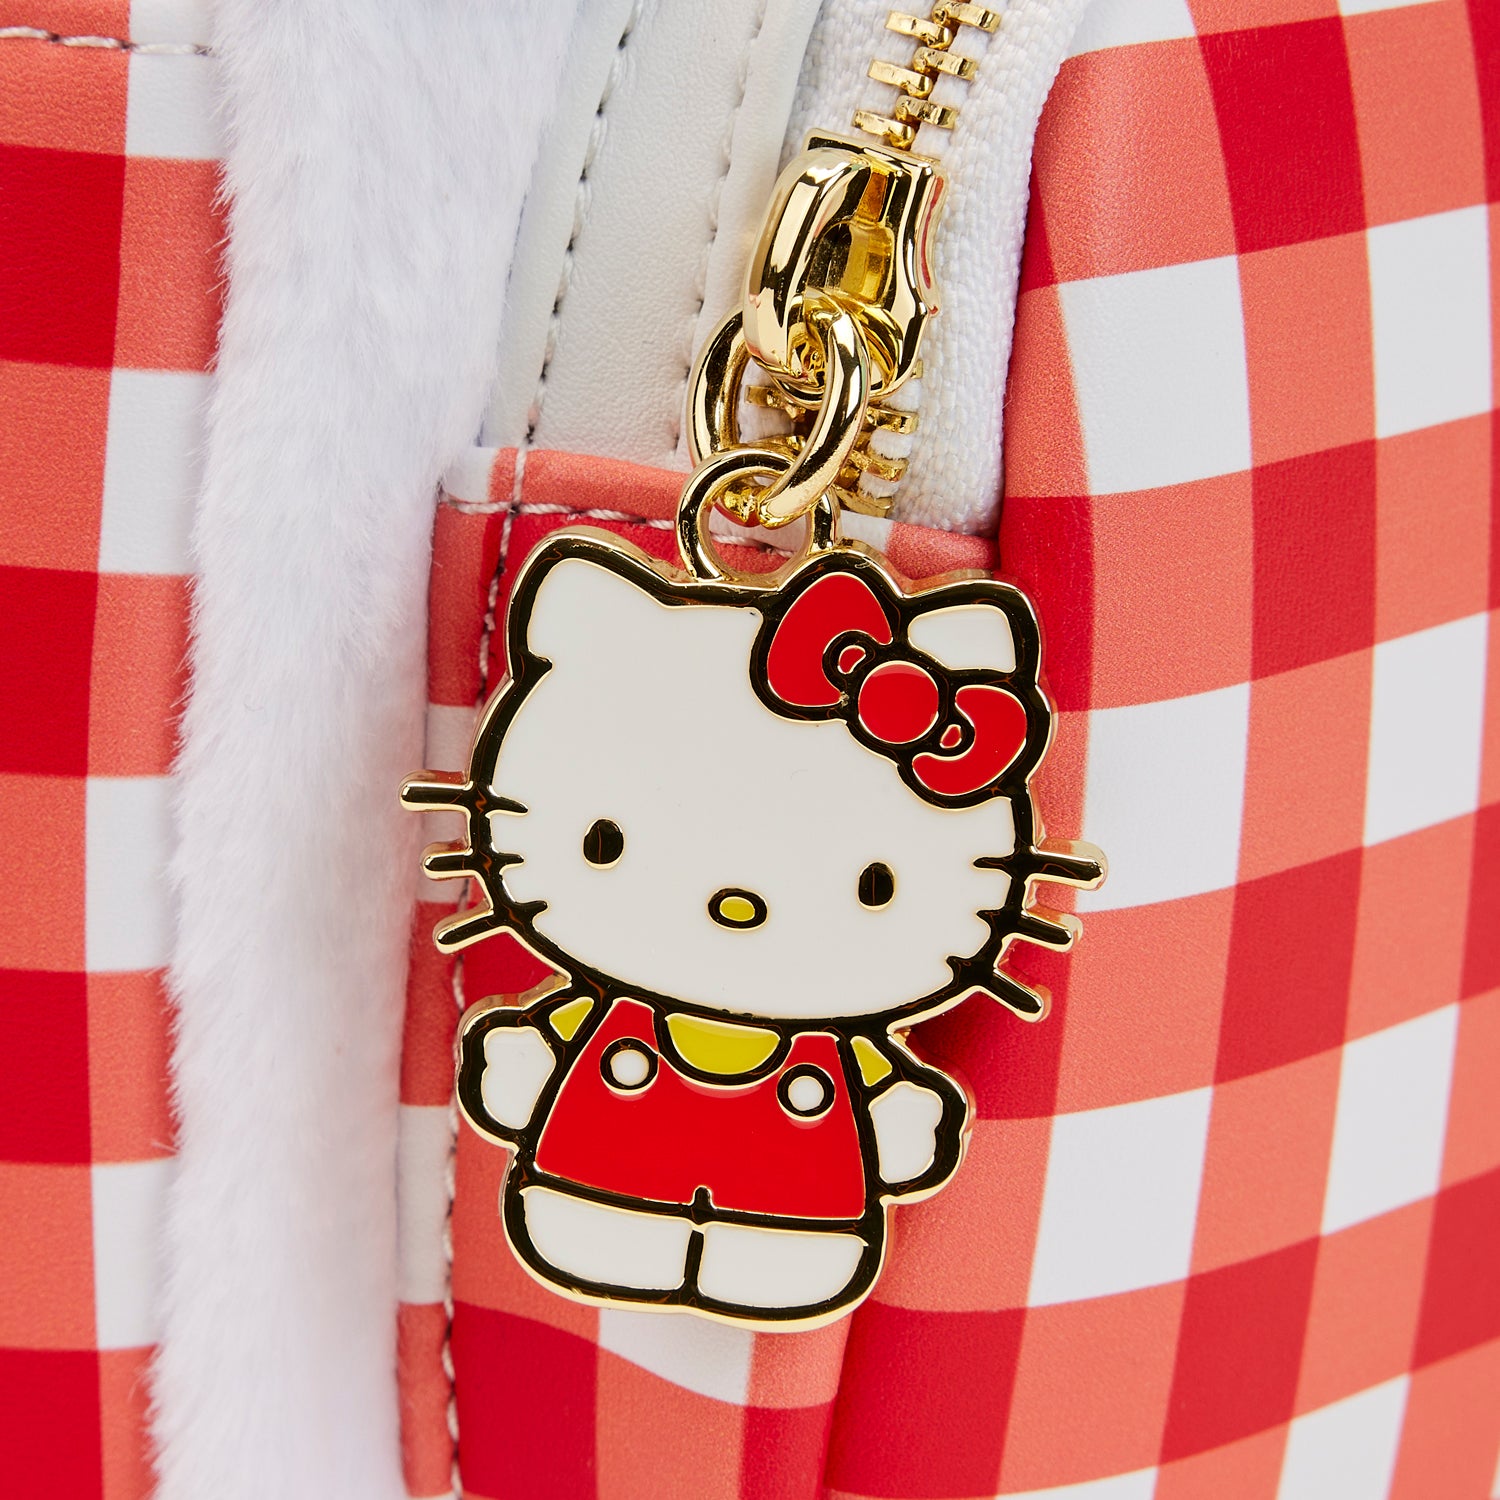 Sanrio | Hello Kitty Gingham Cosplay Mini Backpack